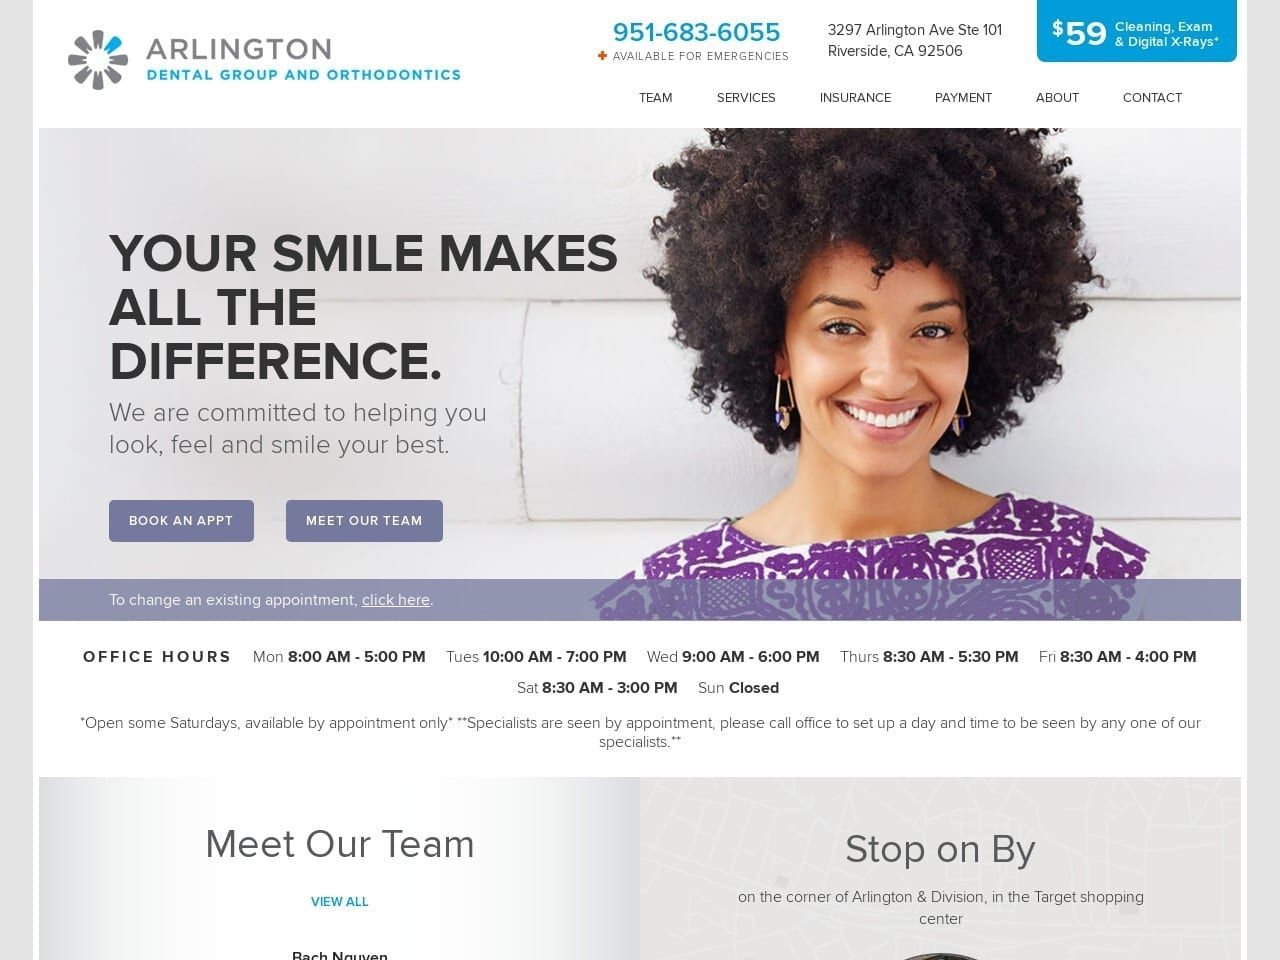 Arlington Dental Group and Orthodontics Website Screenshot from arlingtondentalgroup.com